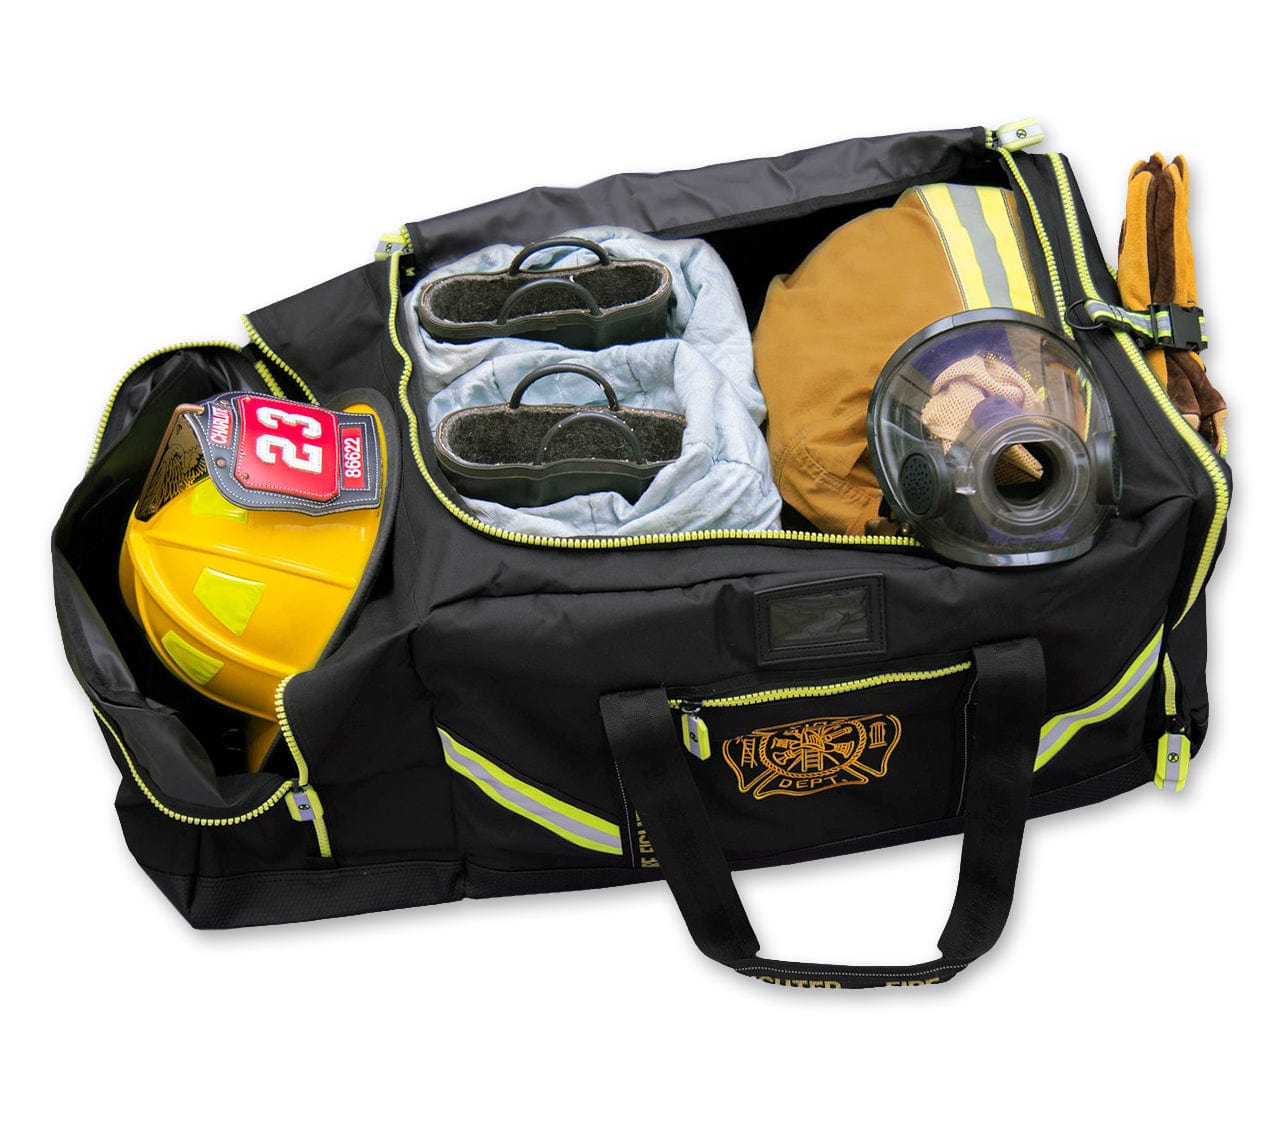 Chief Miller gear bag 3XL Turnout Gear Bag Apparel